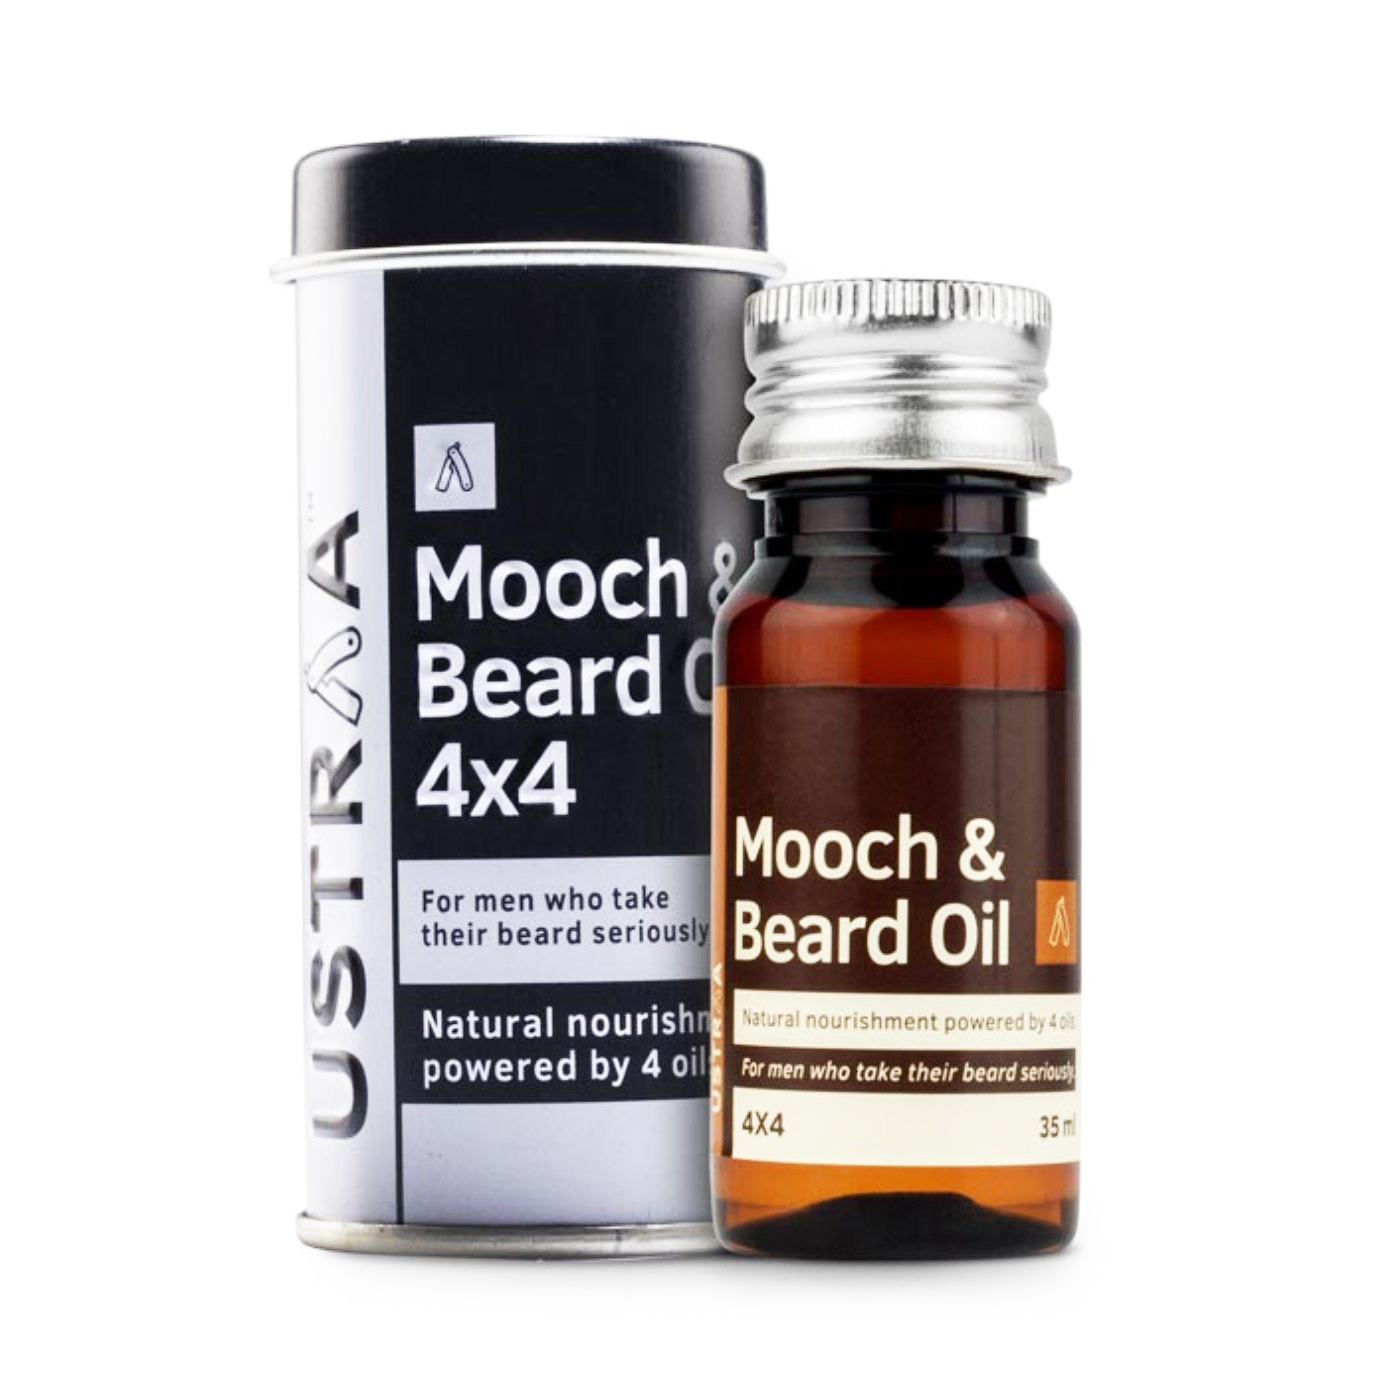 Ustraa Mooch & Beard Oil 4x4 for men - 35ml